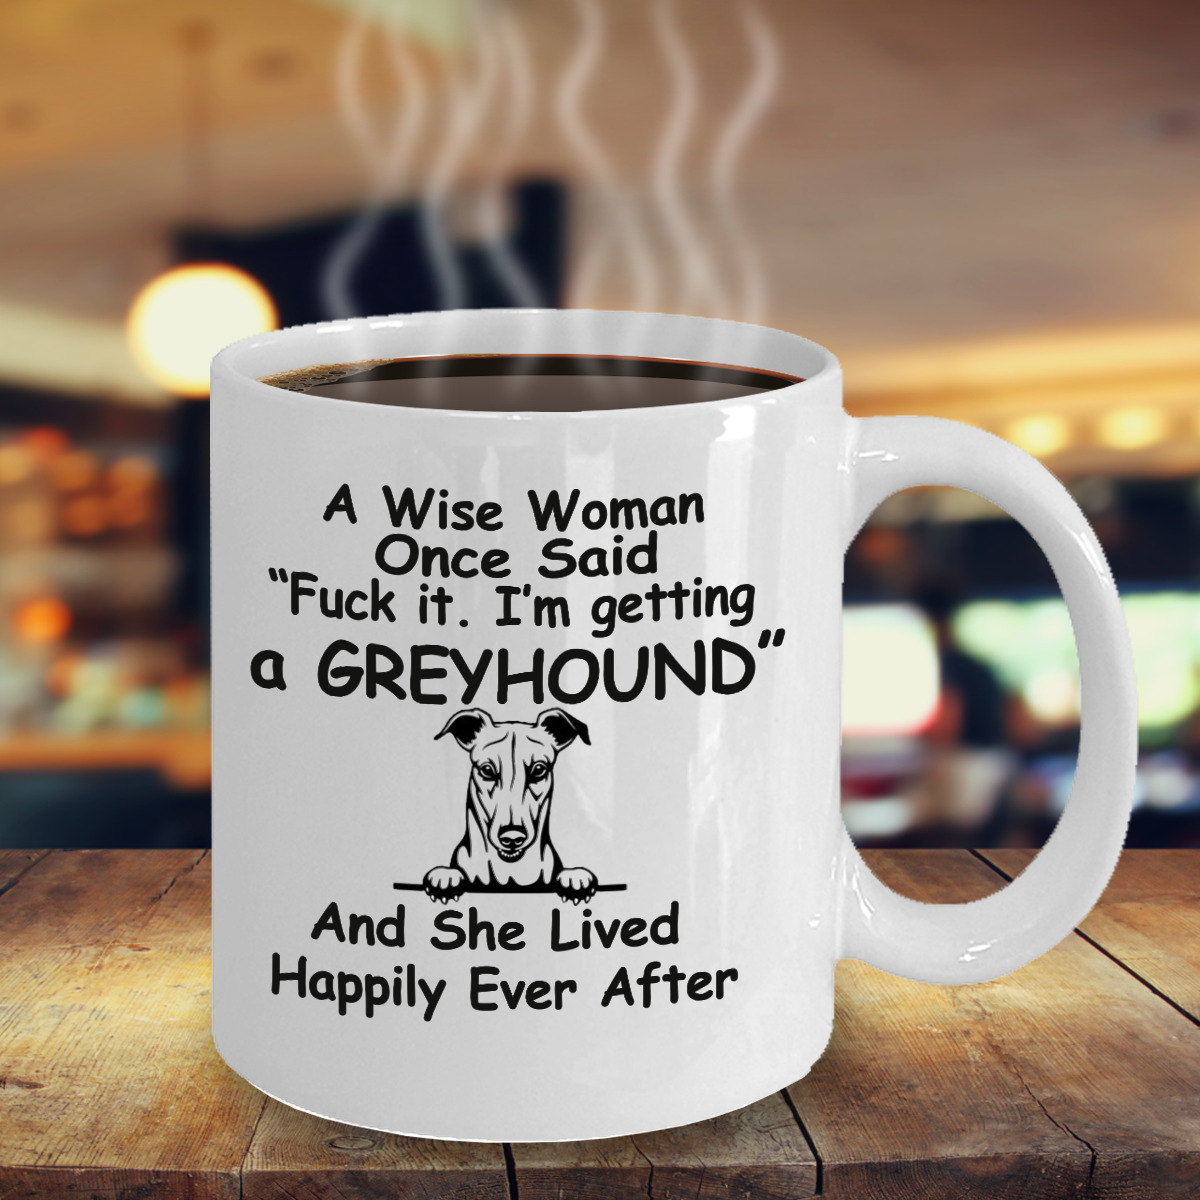 Greyhound Dog,English Greyhound,Greyhounds,sighthound,Greyhounds Dog,Cup,Mugs